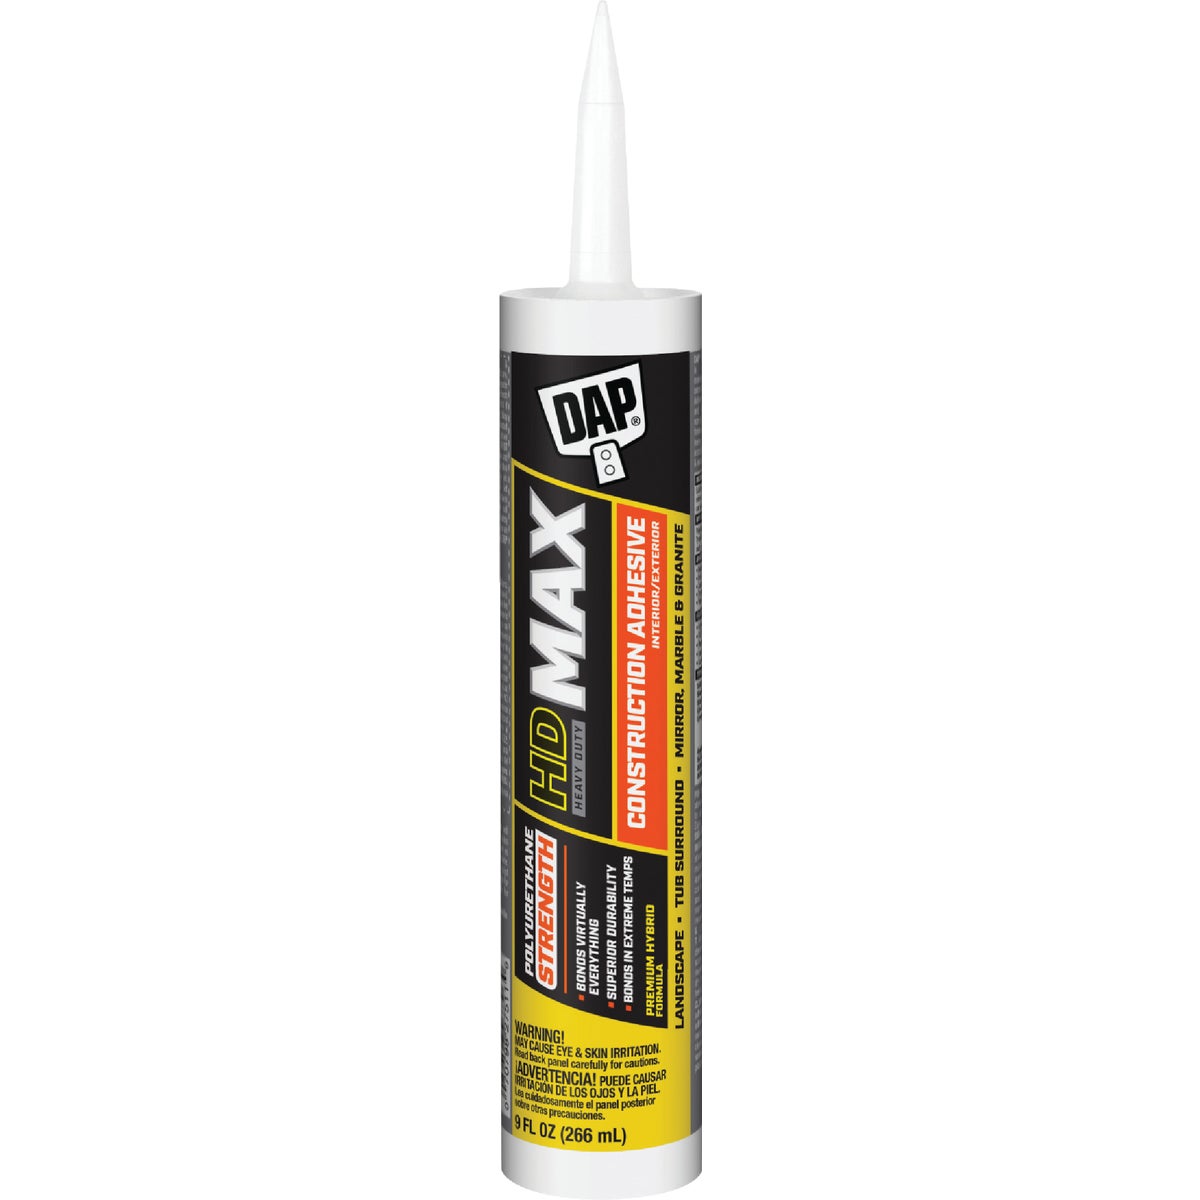 Item 771825, DAP HD Max Construction Adhesive is a high-performance, premium moisture-